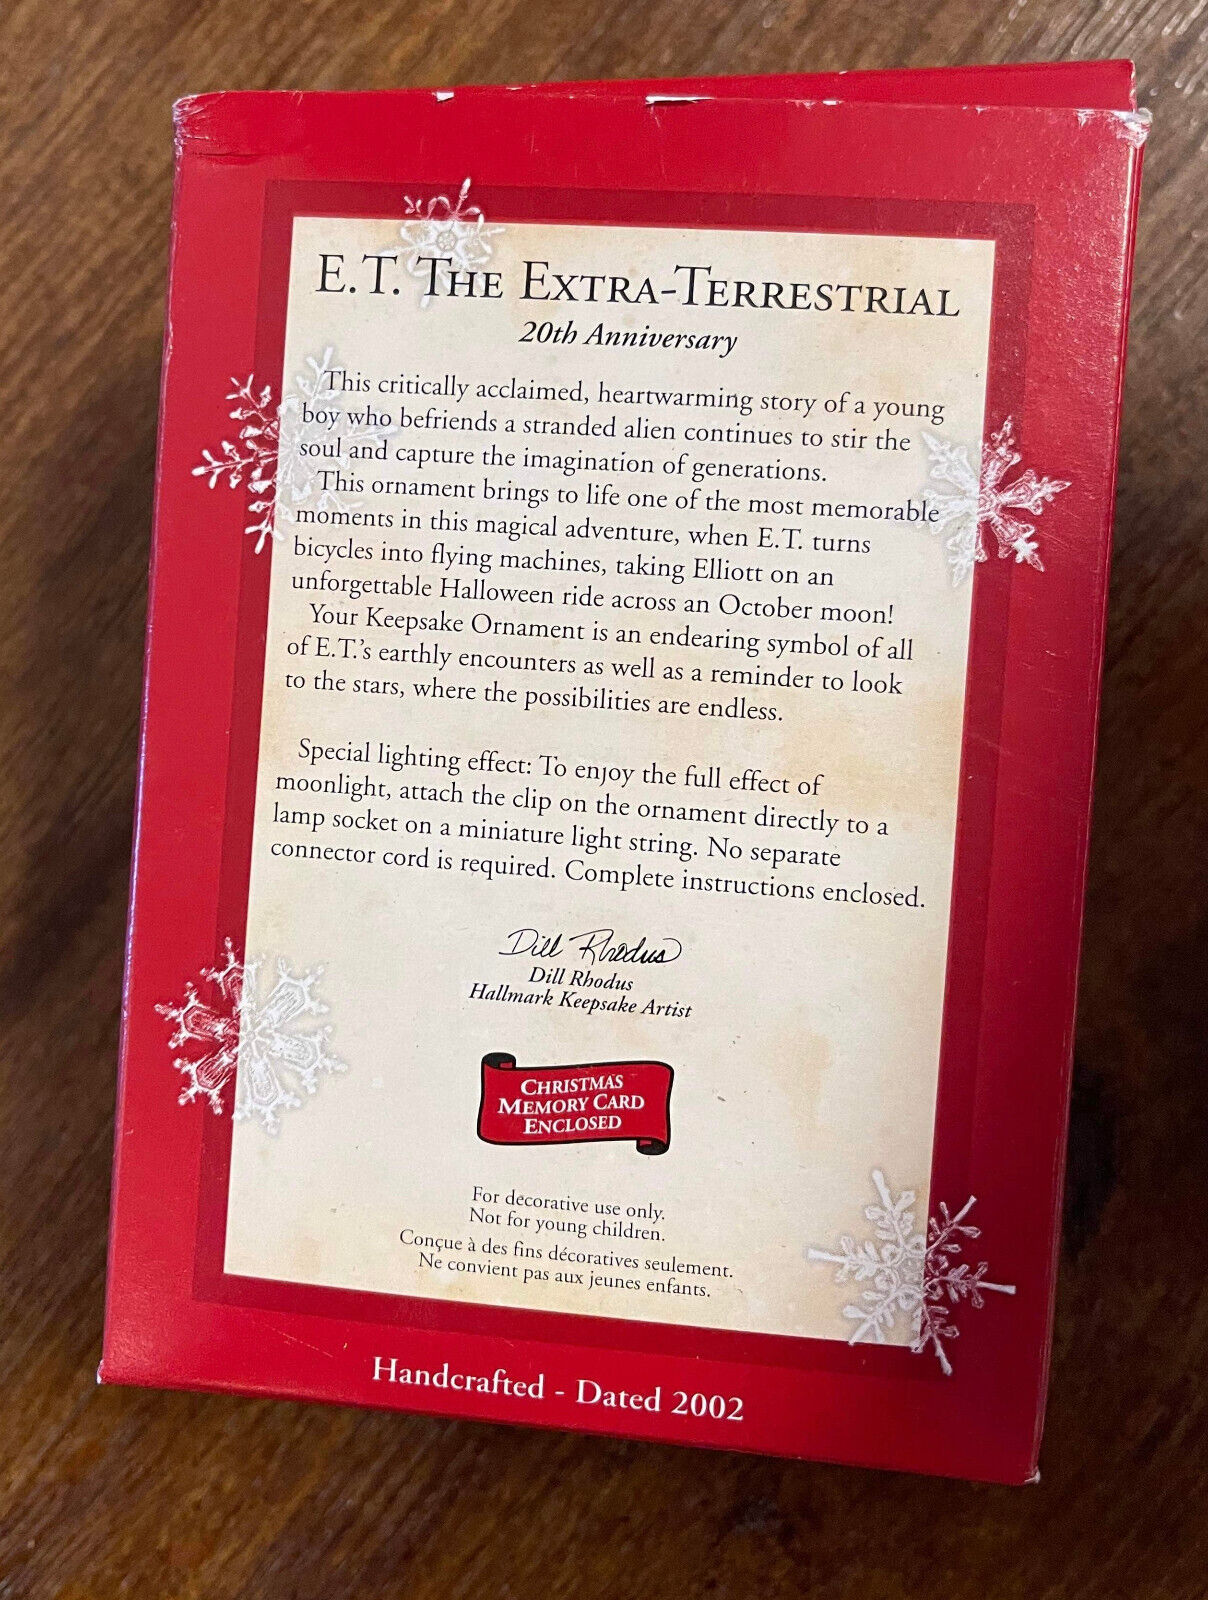 2002 Hallmark Keepsake Ornament E.T. THE EXTRA-TERRESTRIAL 20th Anniversary